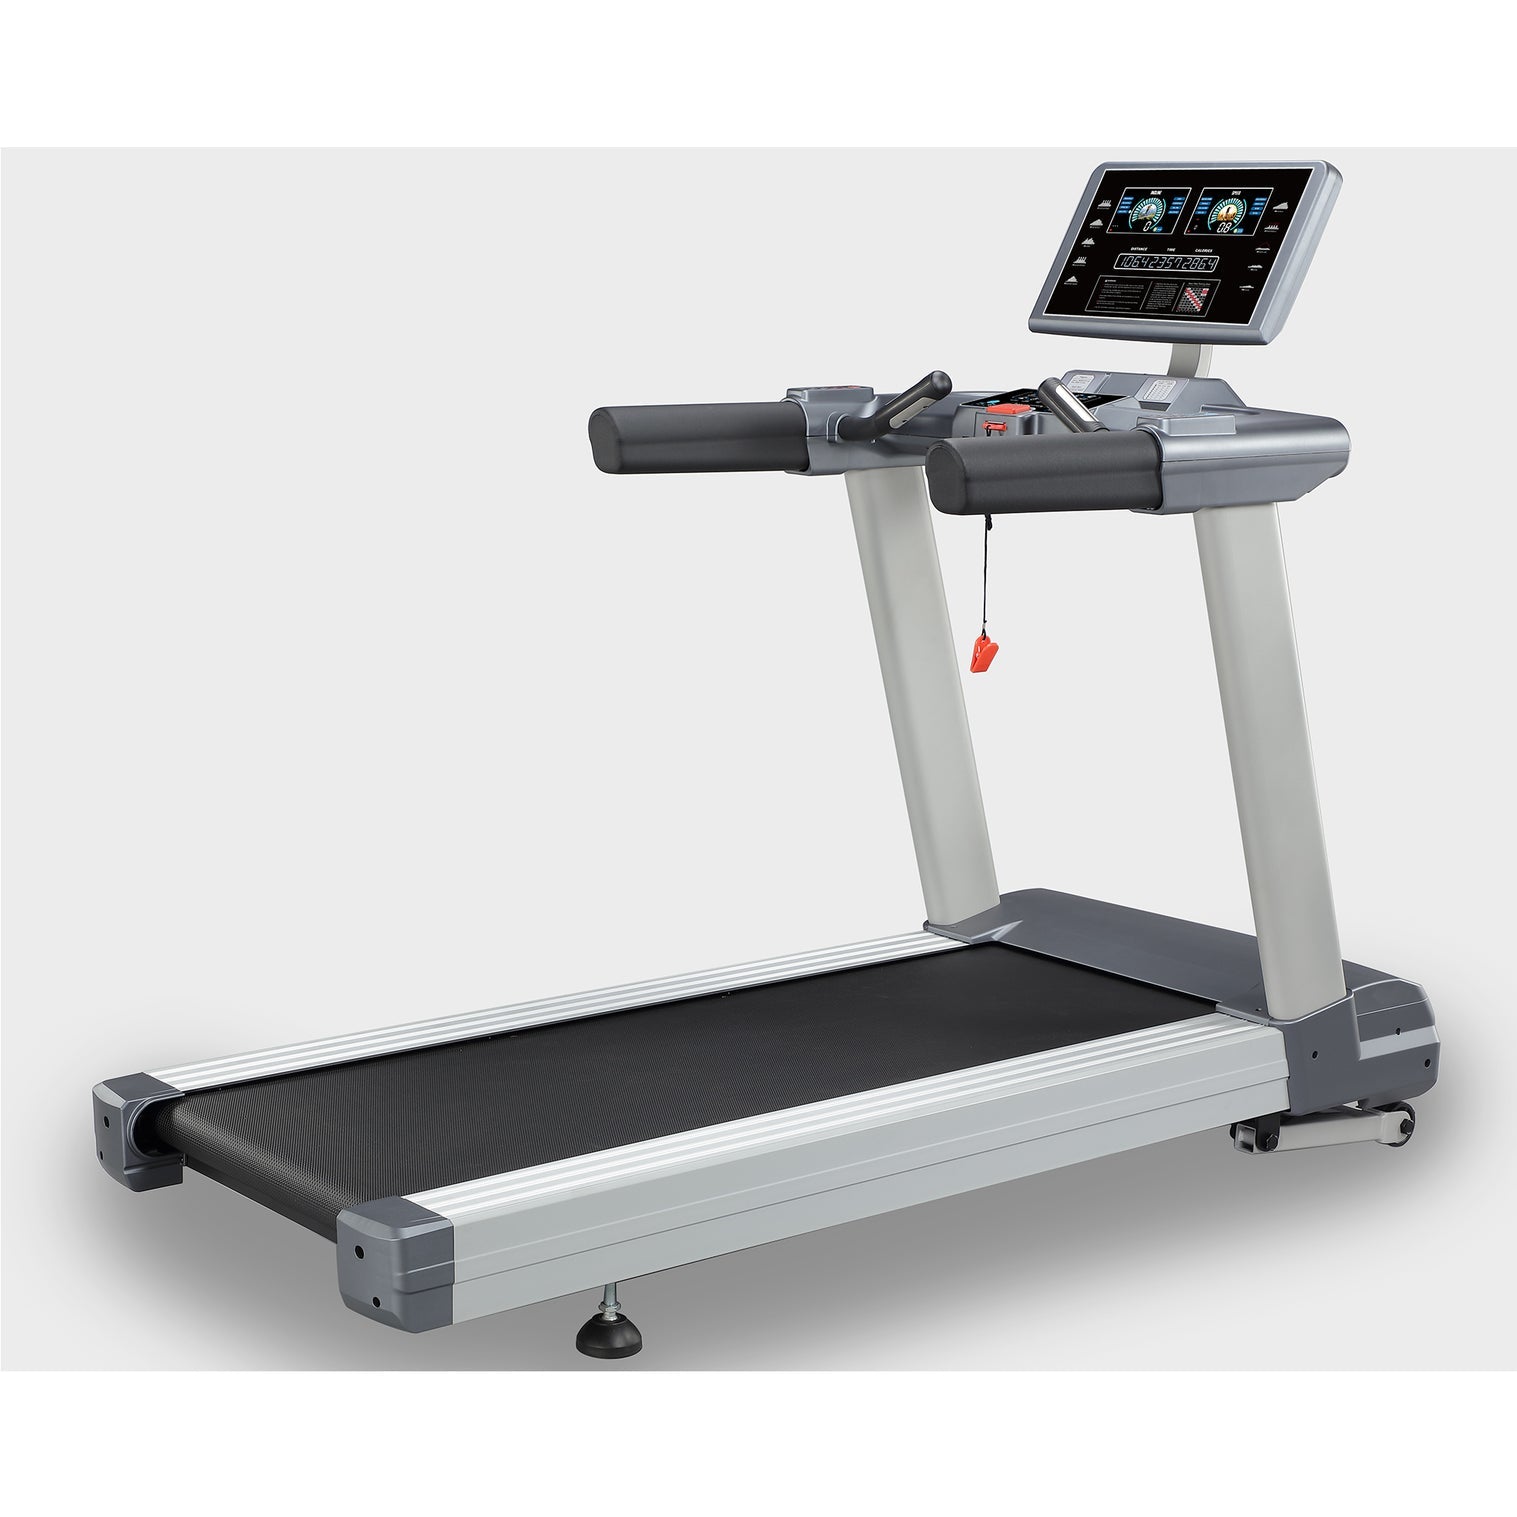 Dawson Sports FZ550 Semi Commercial Treadmill